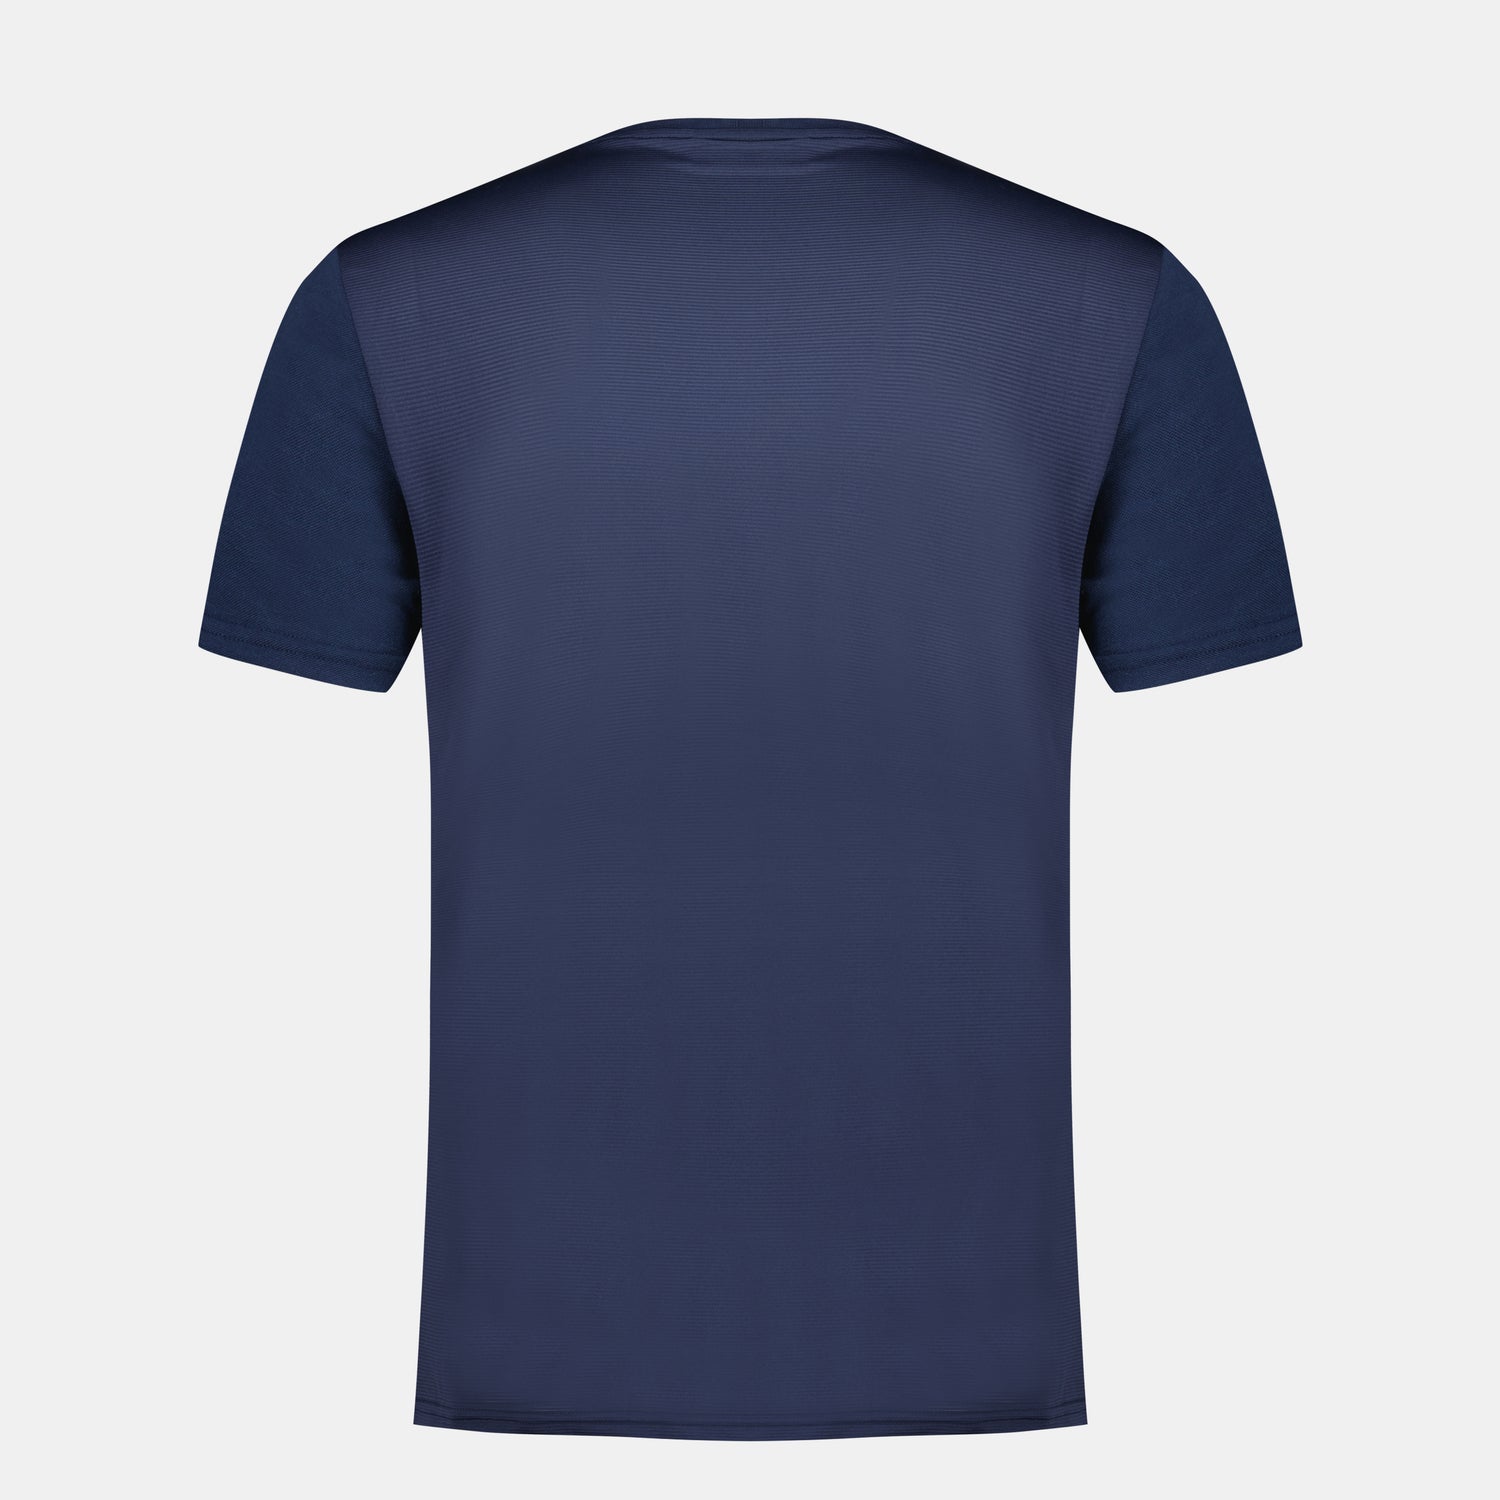 2320133-TENNIS Tee SS N°4 M dress blues | T-shirt Homme